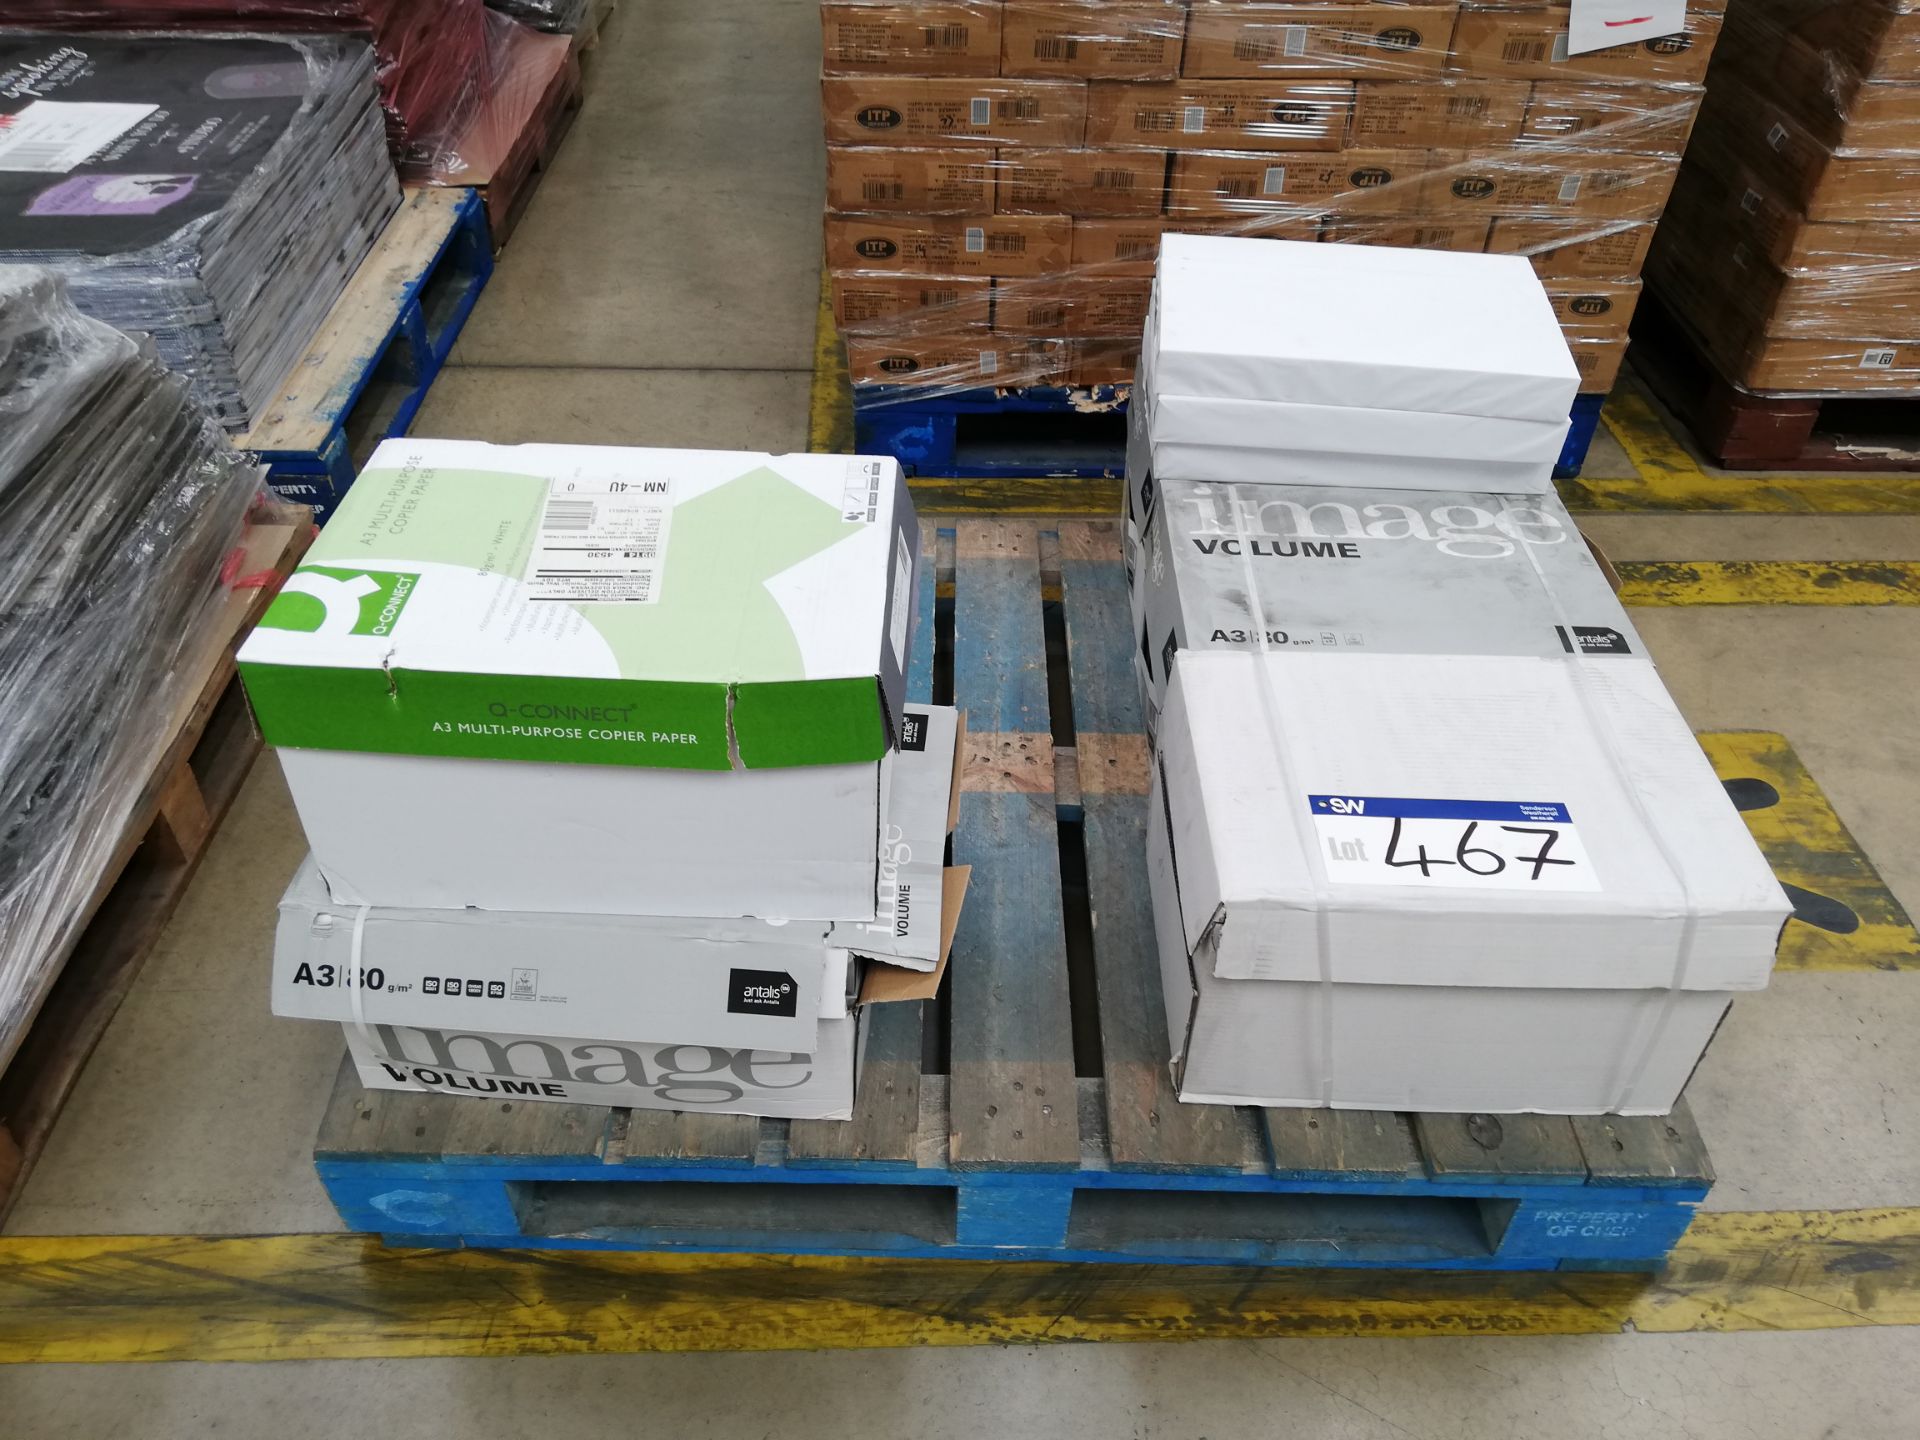 5 x Boxes of A3 Printer Paper